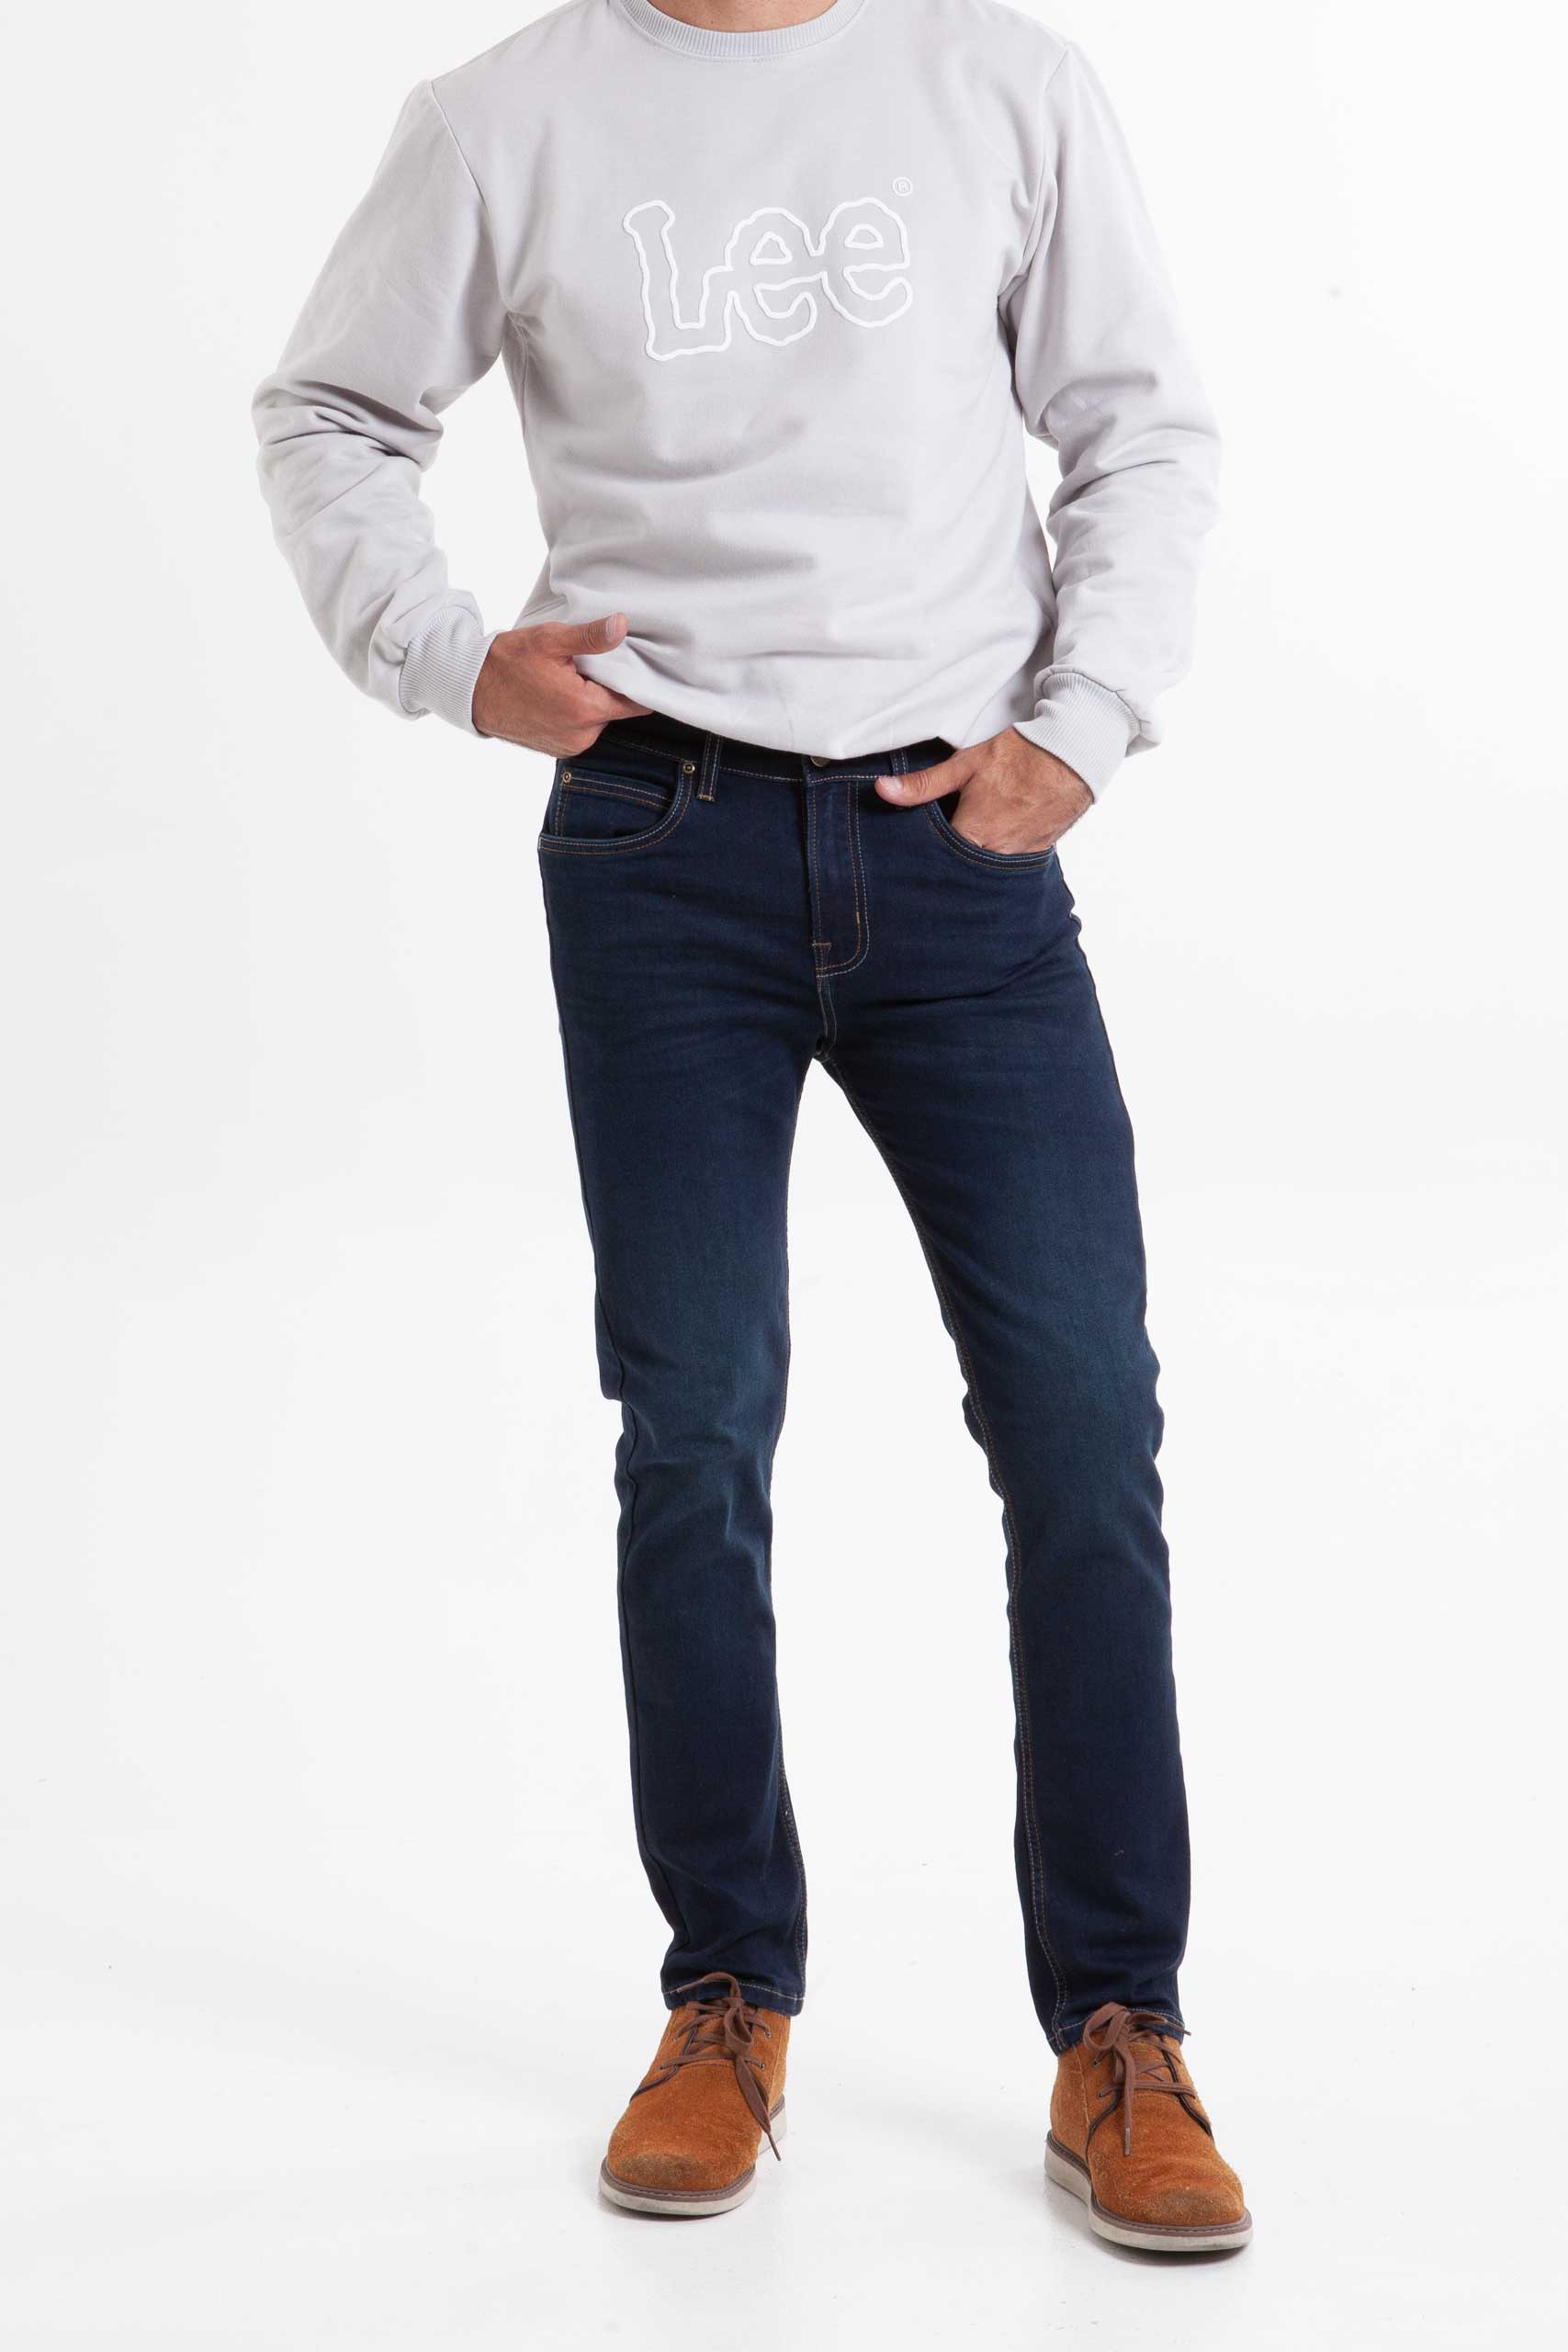 Vista frontal Jean de color pepper de marca lee